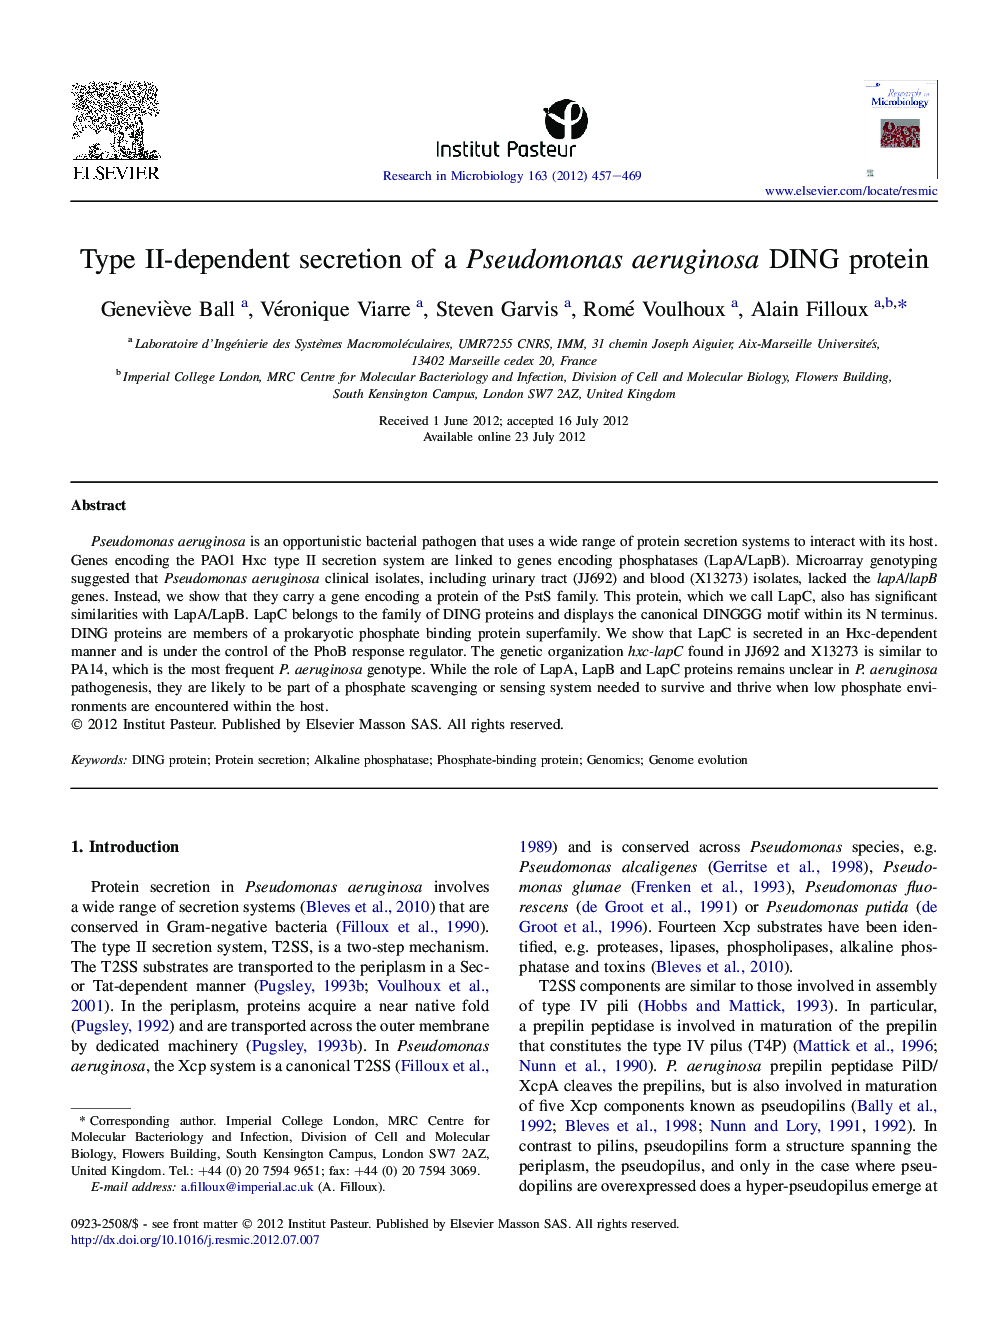 Type II-dependent secretion of a Pseudomonas aeruginosa DING protein